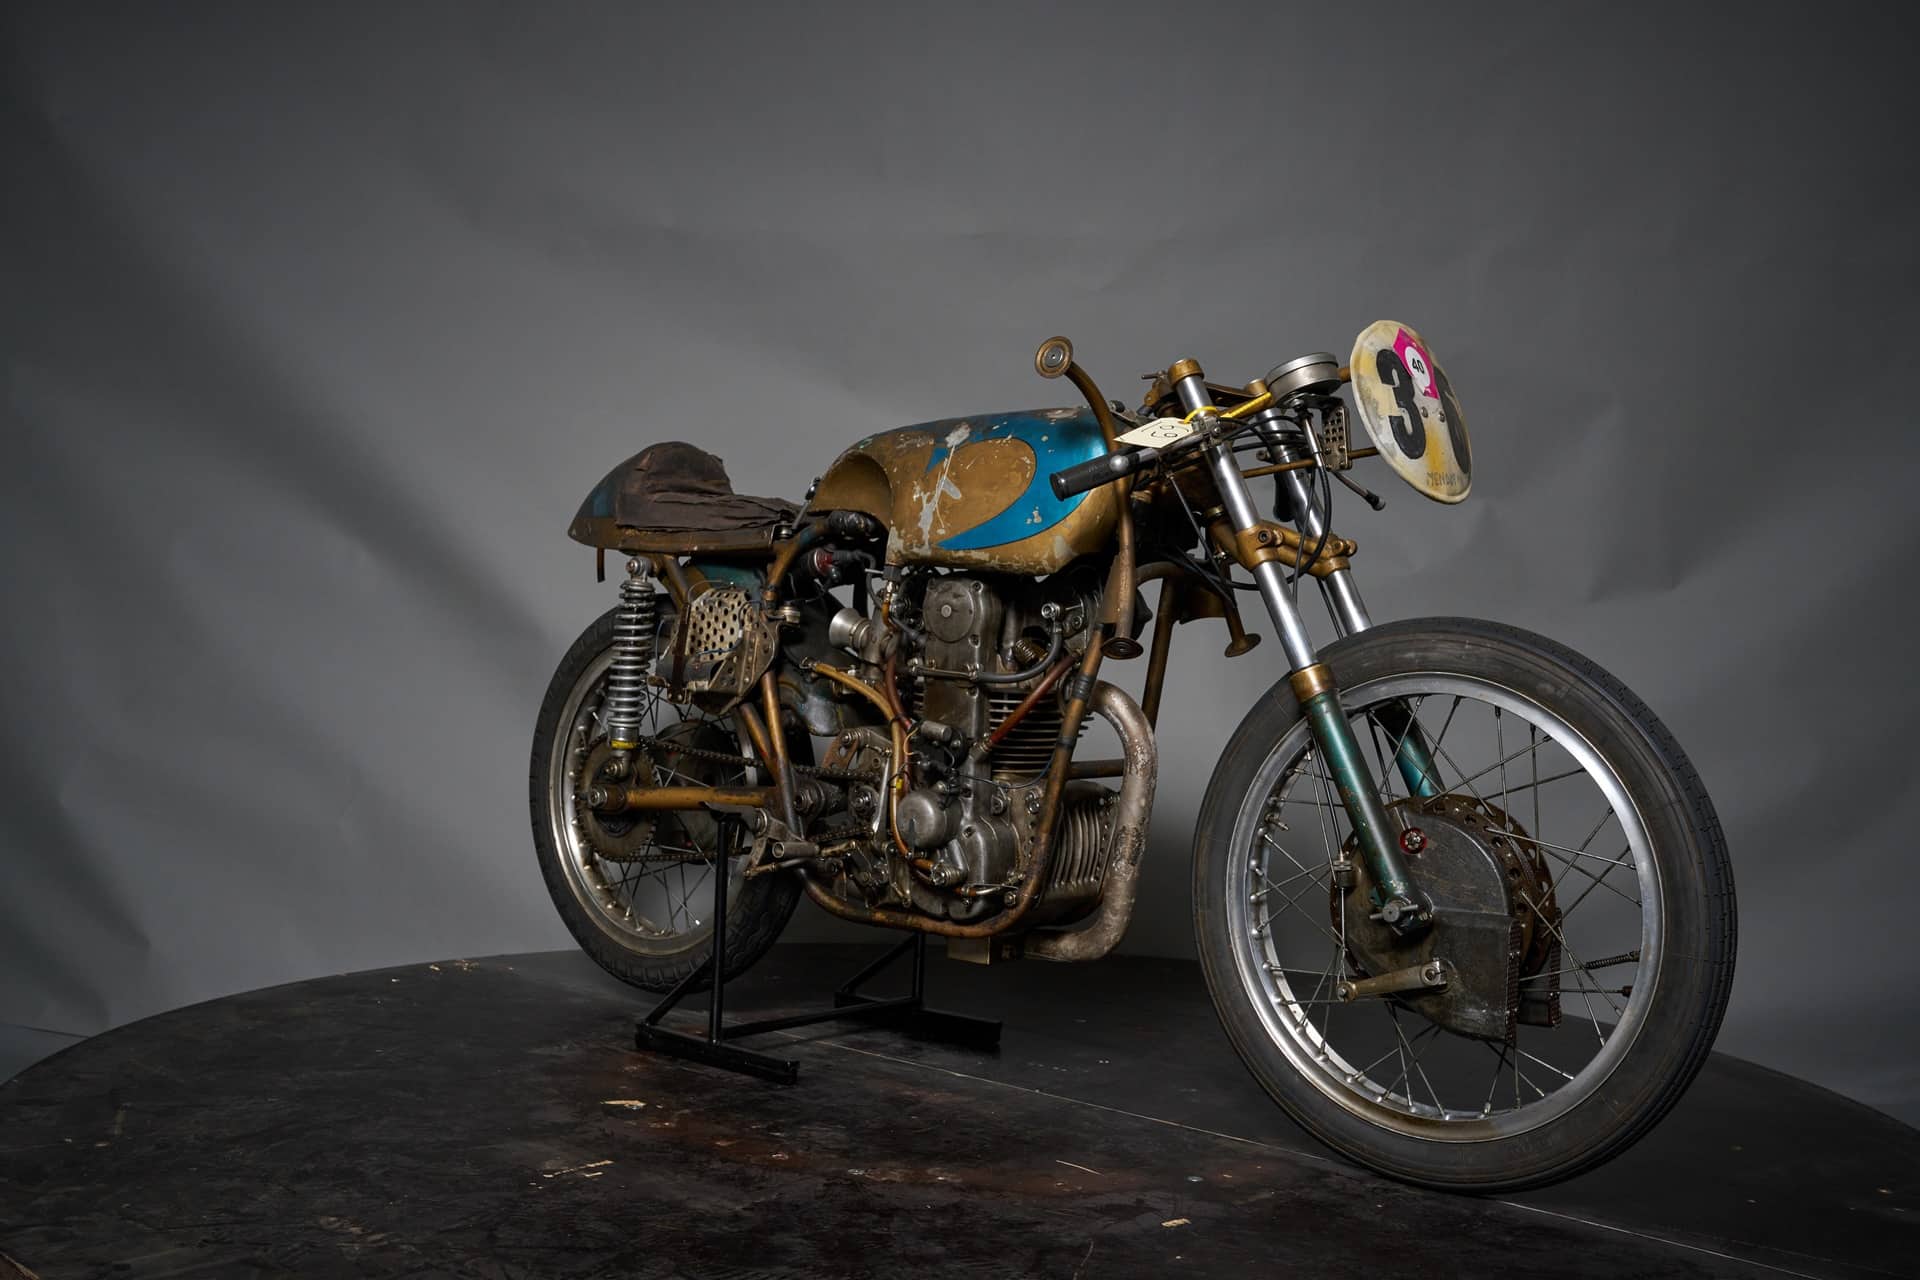 Subastada una Moto Morini 250 cc Bialbero Grand Prix de 1958: Un pedacito de historia de los GP